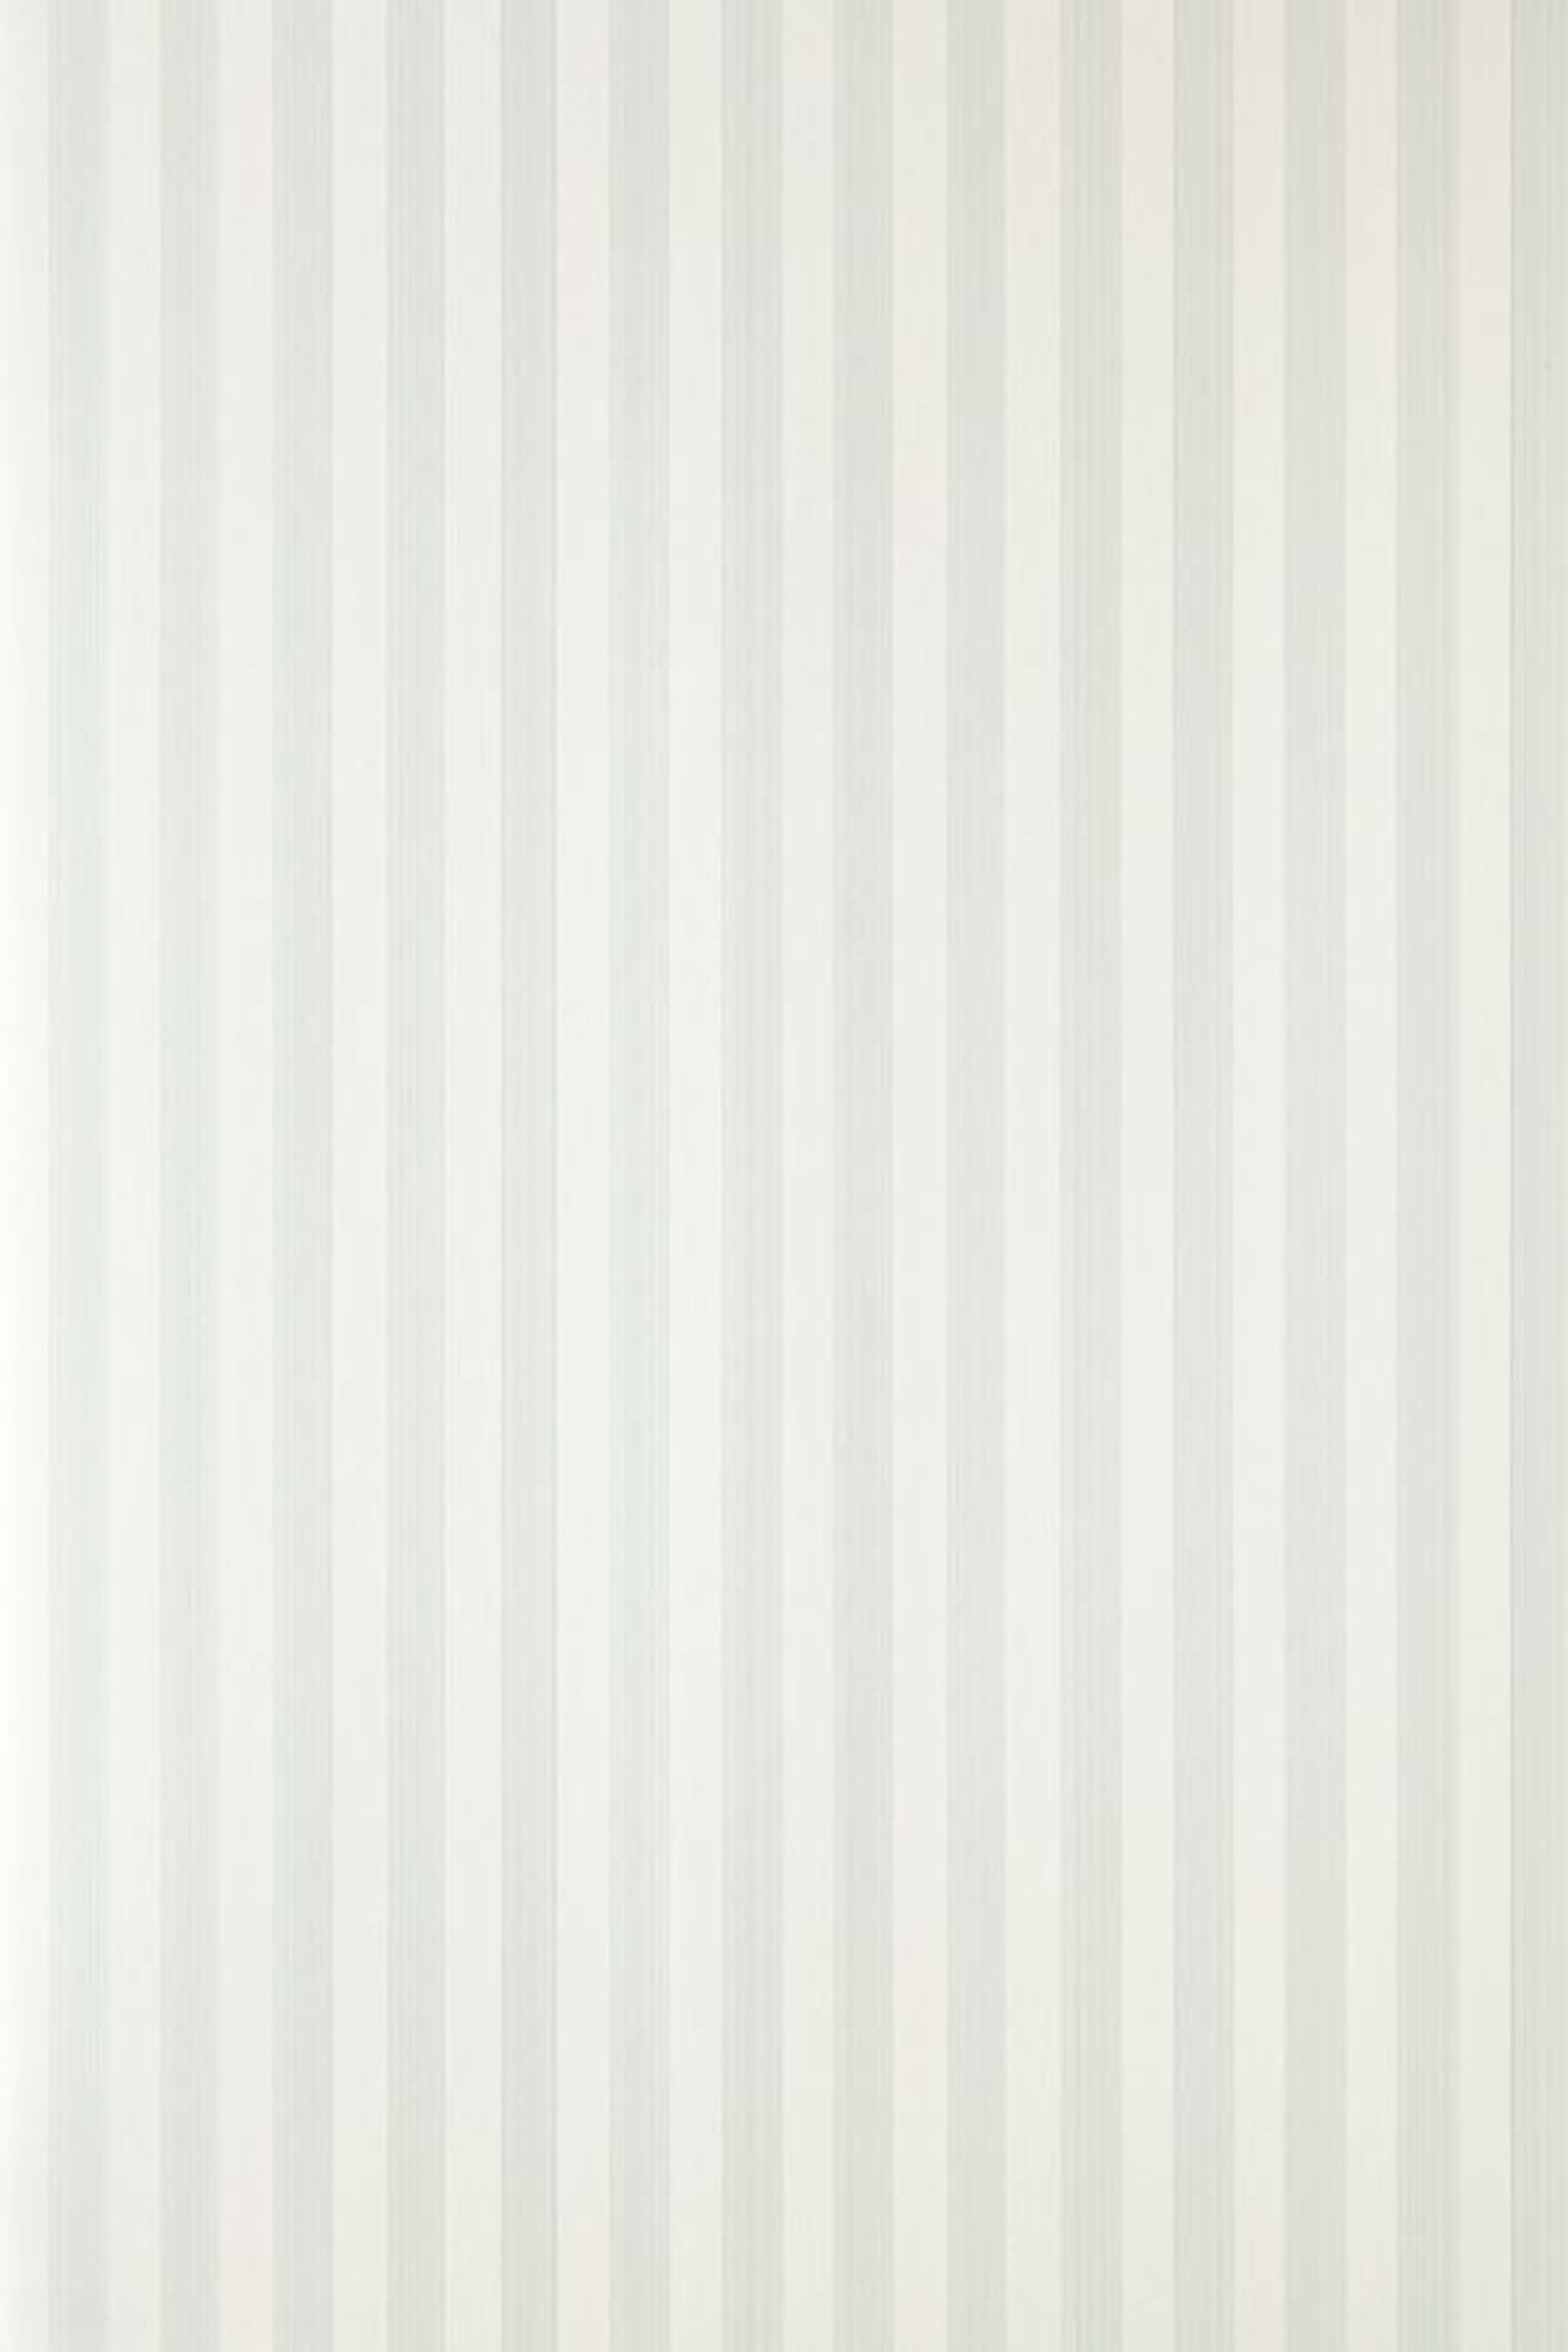 Closet Stripe Wallpaper - Anthropologie